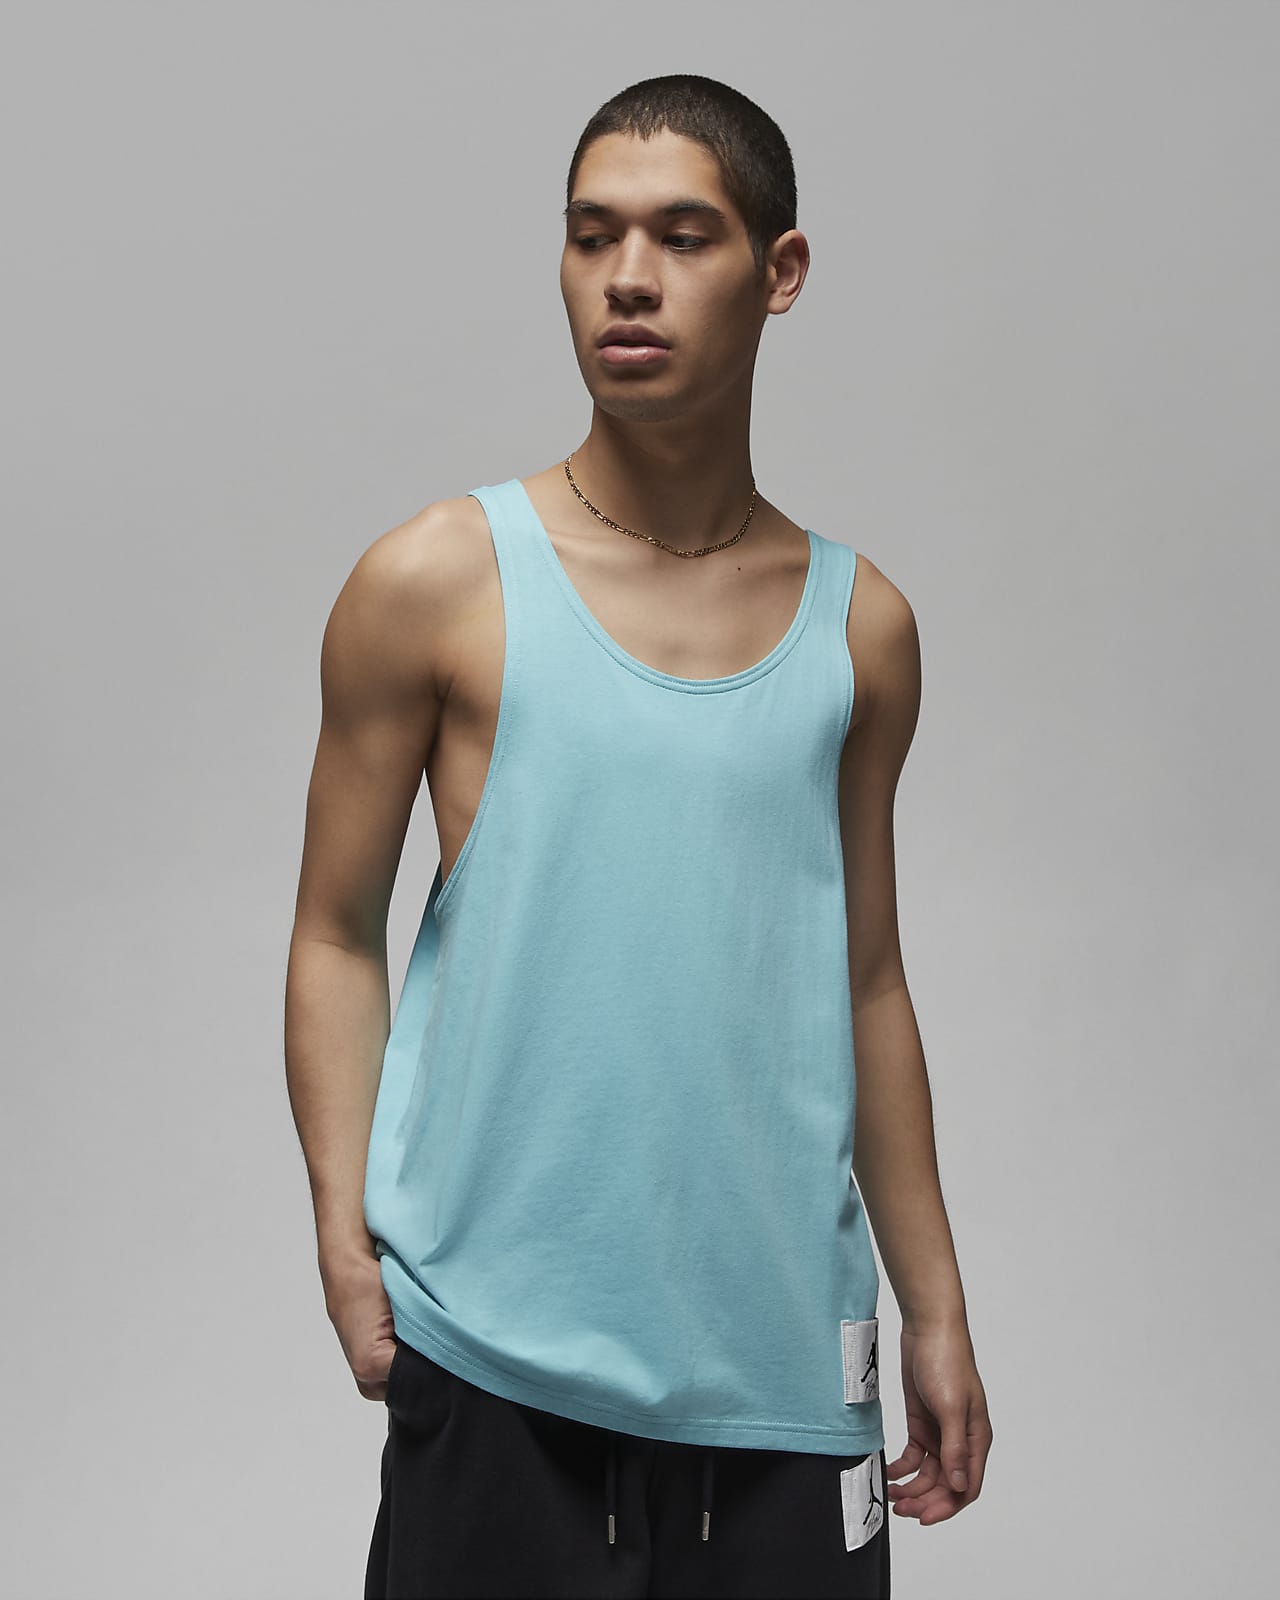 2023 Summer Fashion Men's Tank Tops Cotton Sleeveless Shirt Man